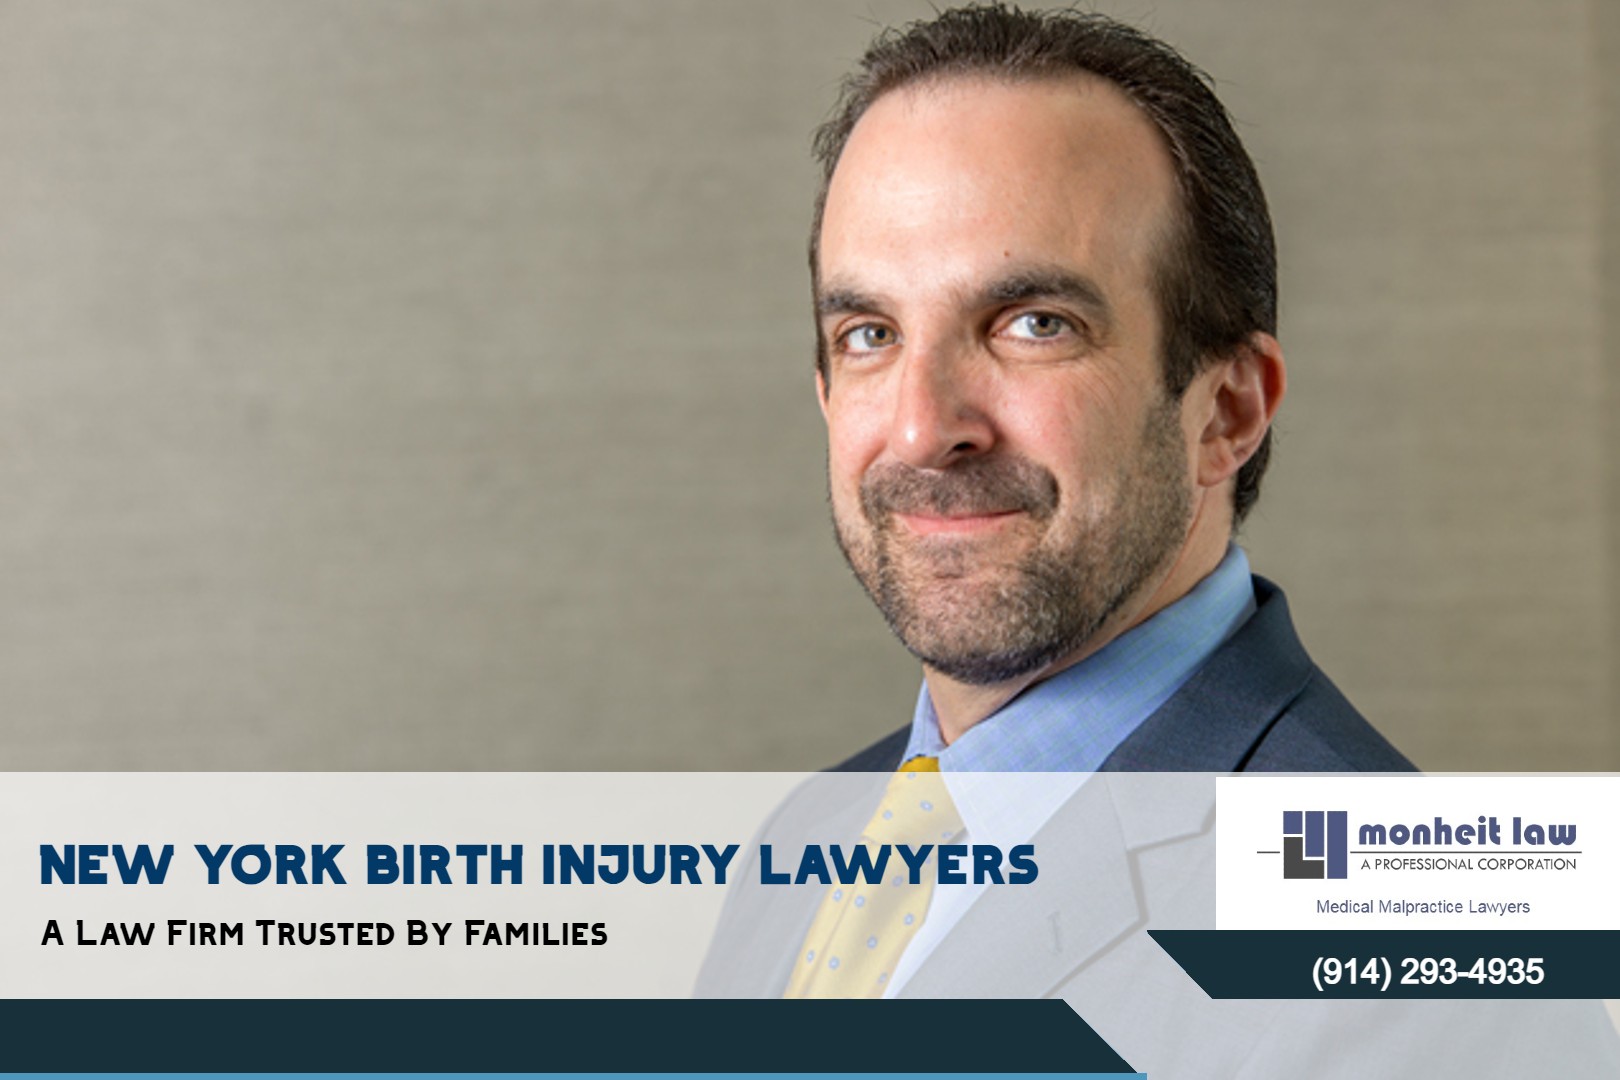 Birth injury lawyers - westchester county new york - monheit law